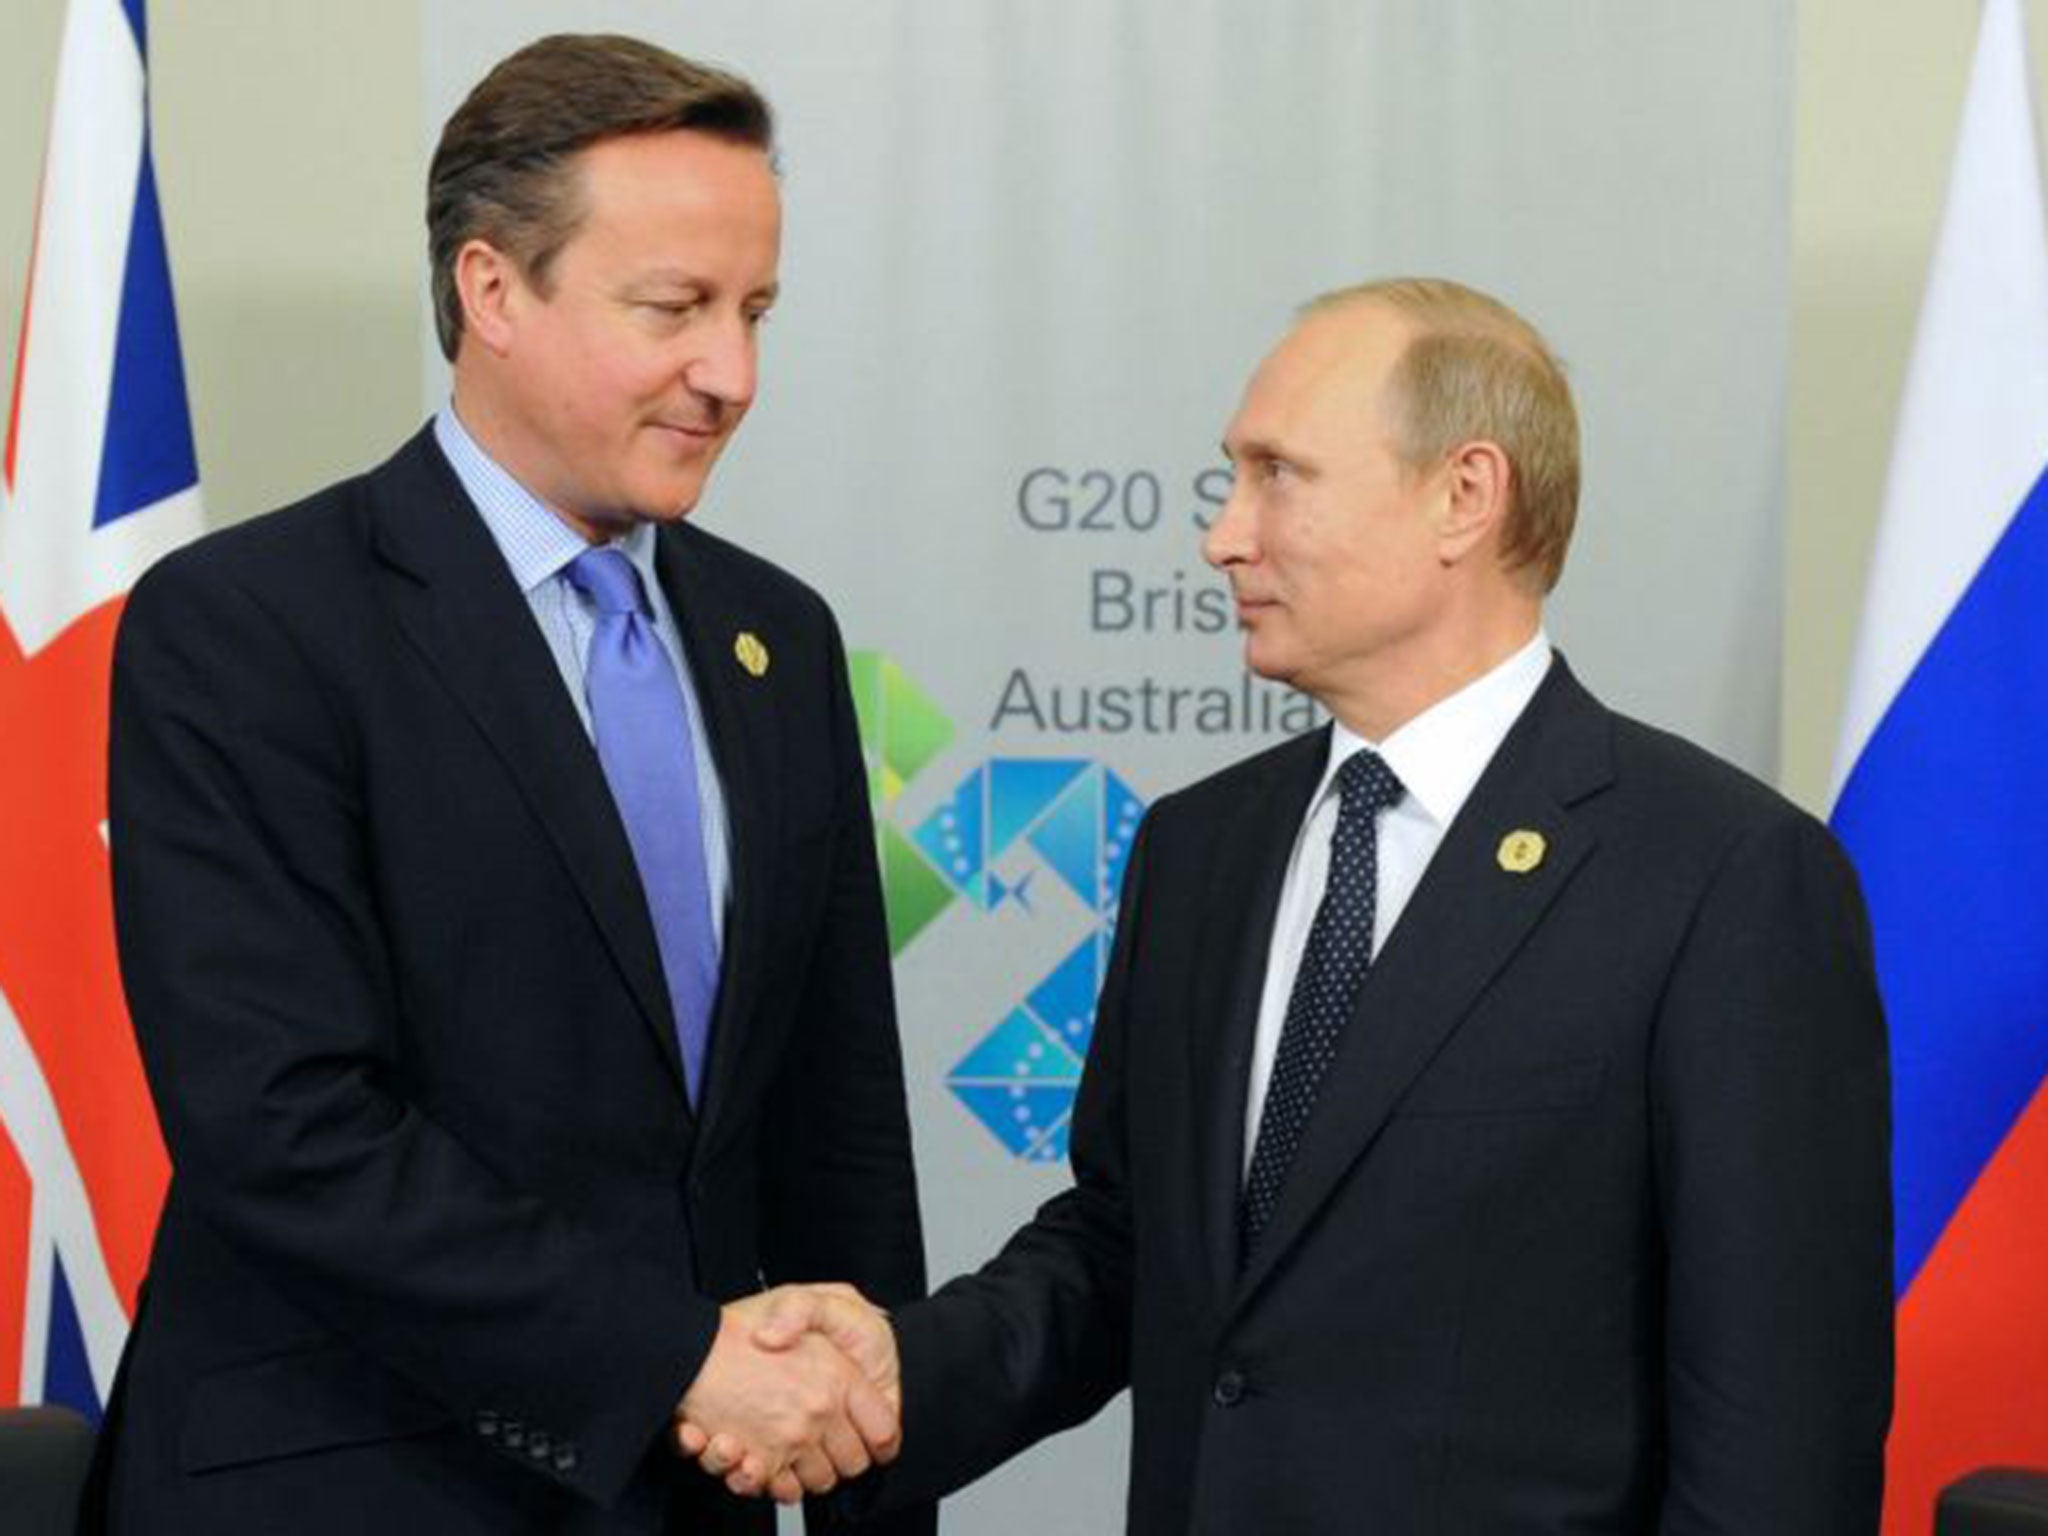 David Cameron and Vladimir Putin shake hands at the G20 in Brisbane